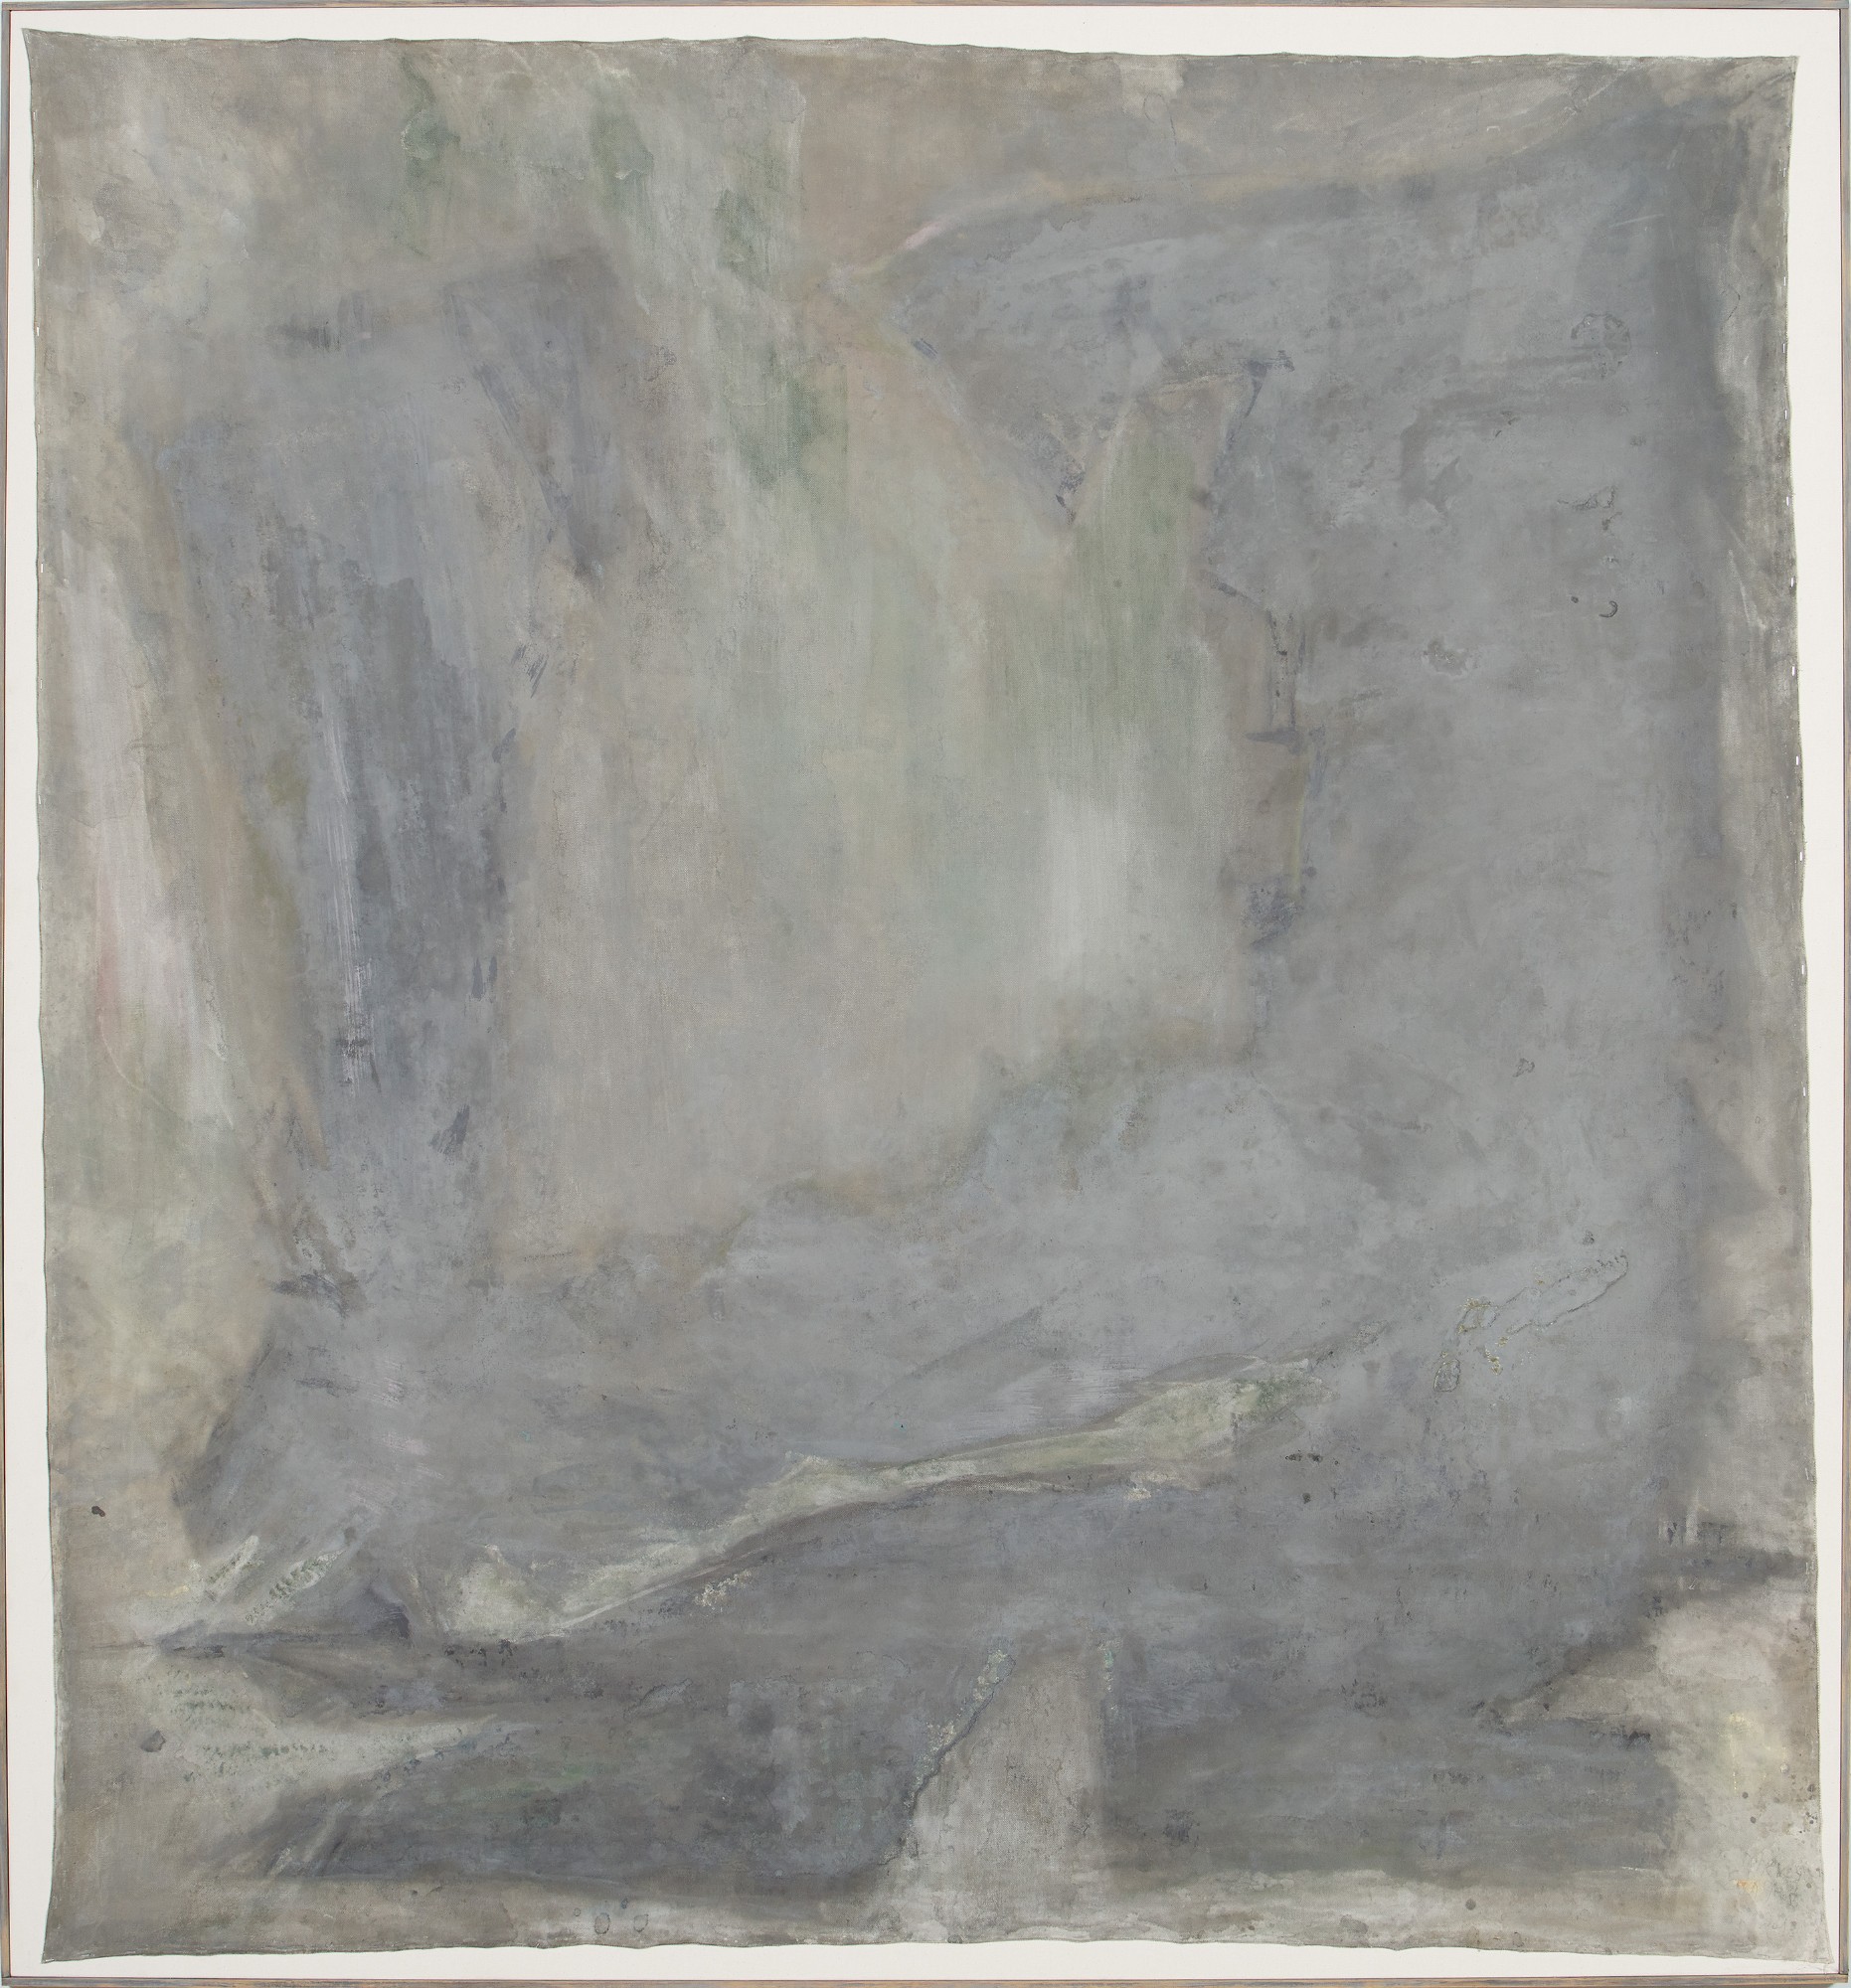 Erwin Gross, Hohlweg, 2013, acrylic, pigment on cotton, 212 x 199 cm